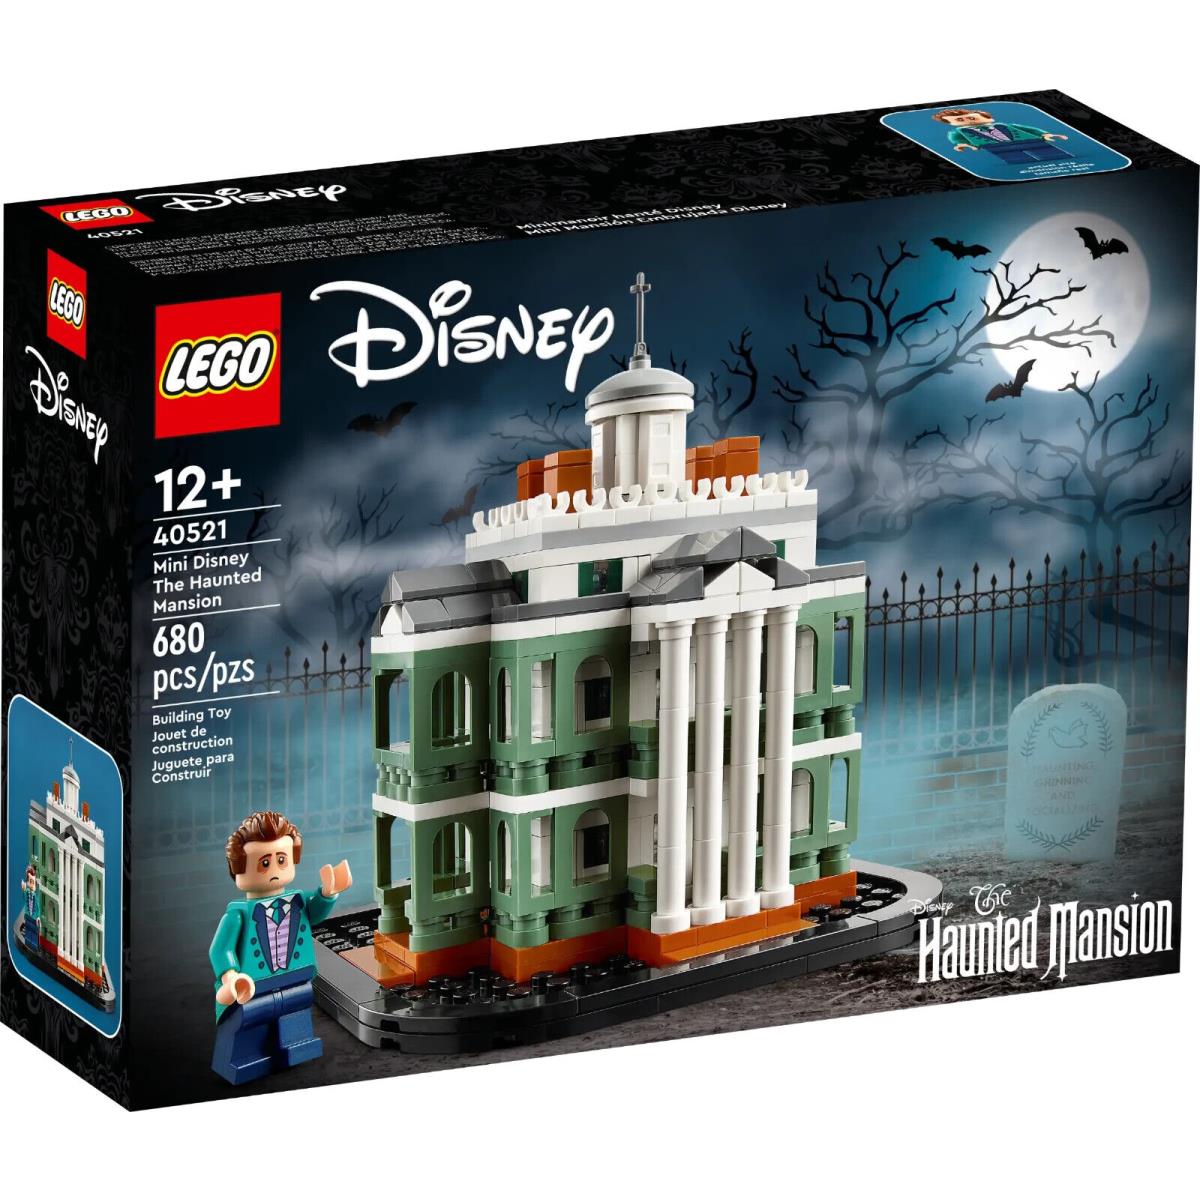 Mini Disney The Haunted Mansion Lego 40521 Retired